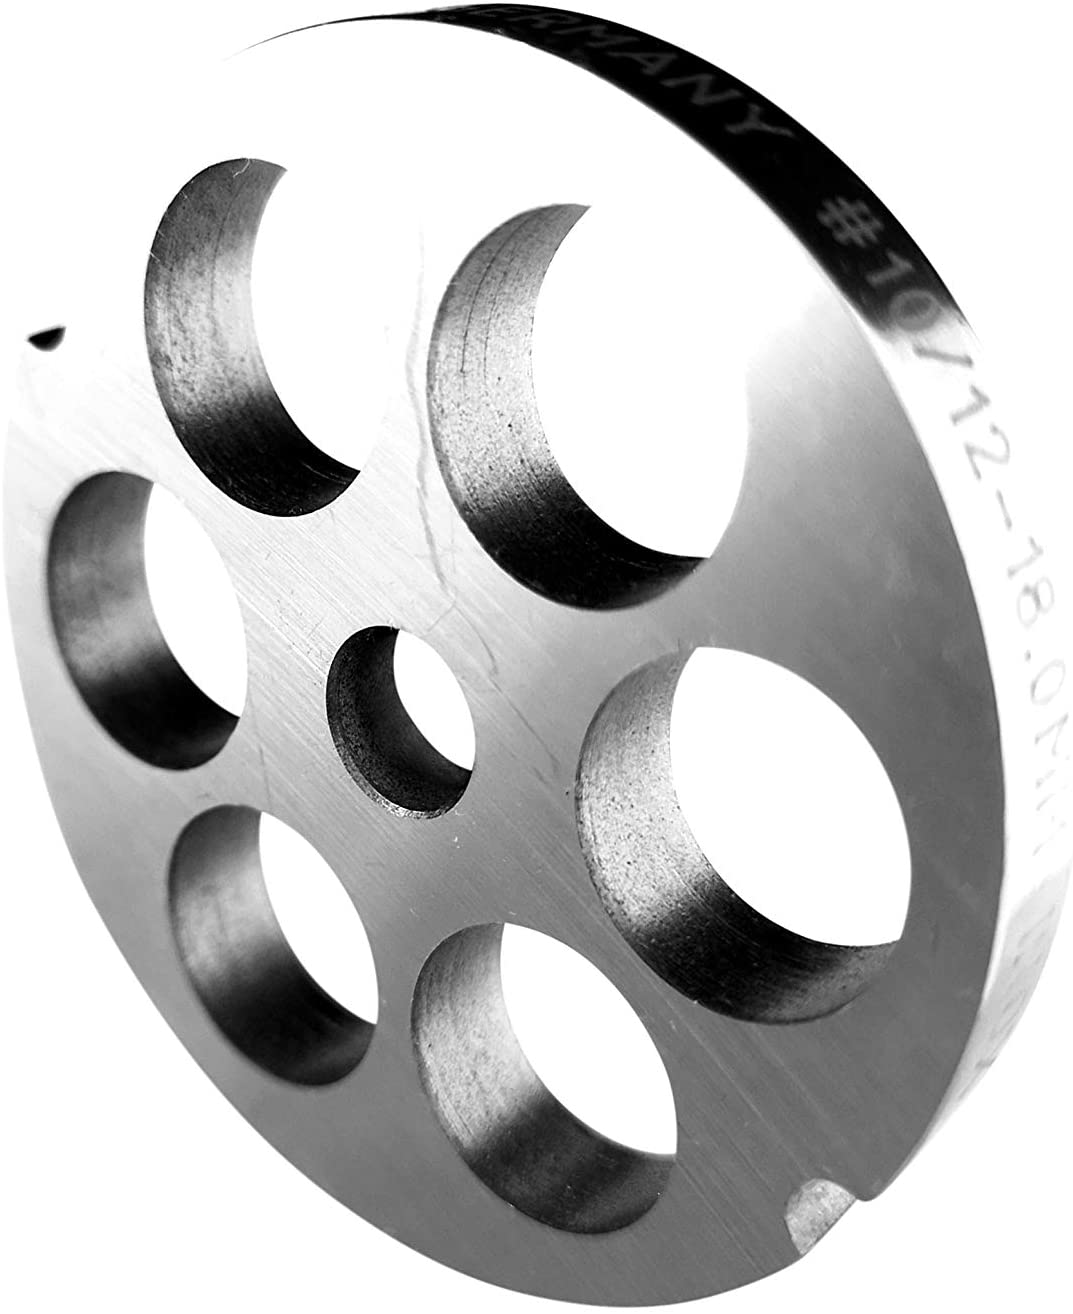 Wolfcut INOX Perforated Disc with 2 Slots Size 10 & 12 - 18.0 mm Bore - for Mincer Reber Type N.12EL9501 N, Alexanderwerk, Bartscher FW80, 12SQO